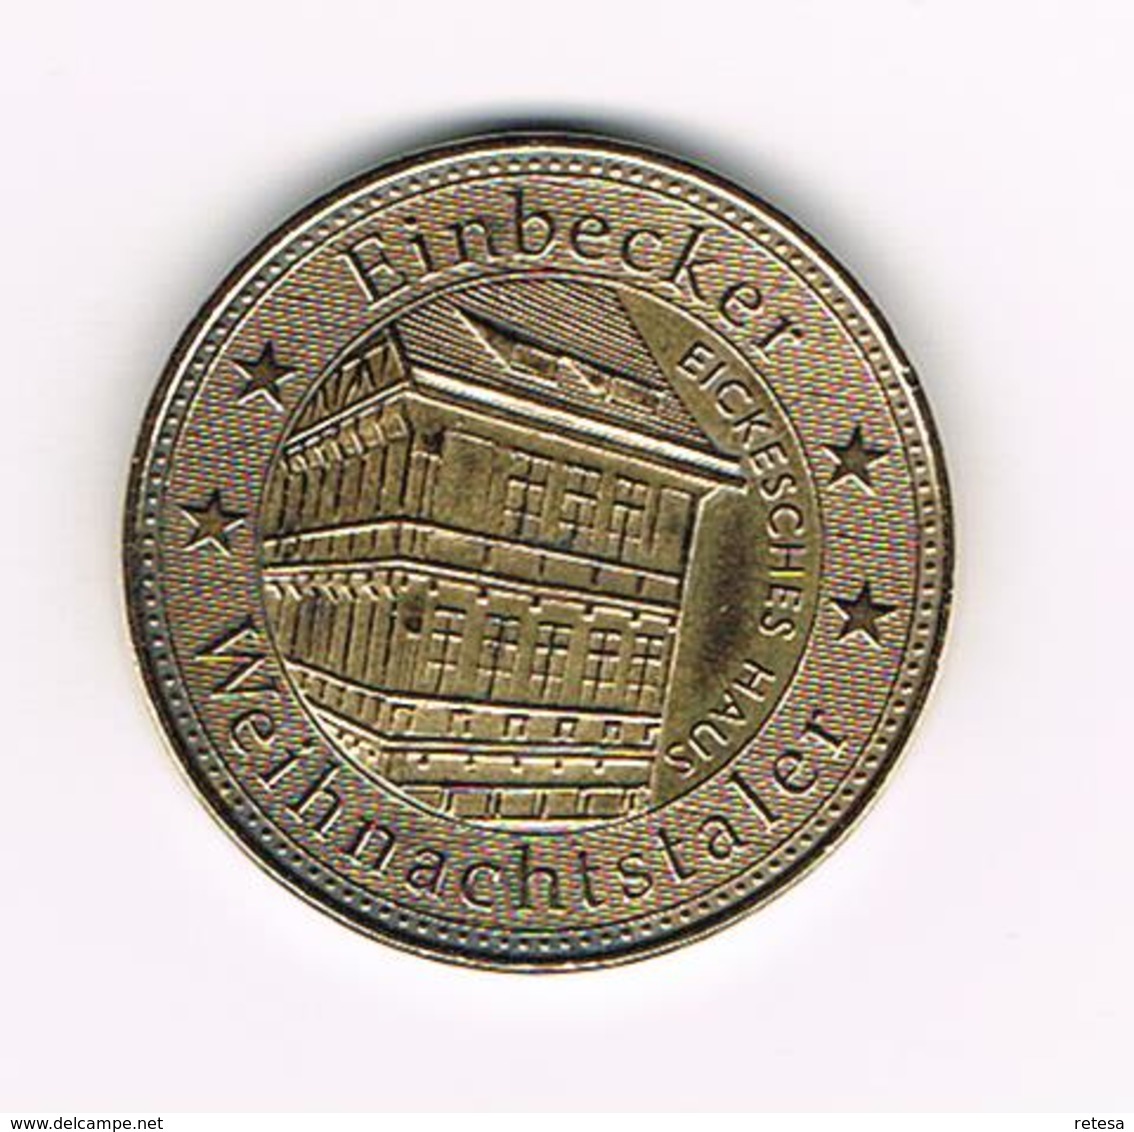 &  PENNING  EINBECKER  WEIHNACHTSTALER  EICKESCHES HAUS 2004 - Monedas Elongadas (elongated Coins)